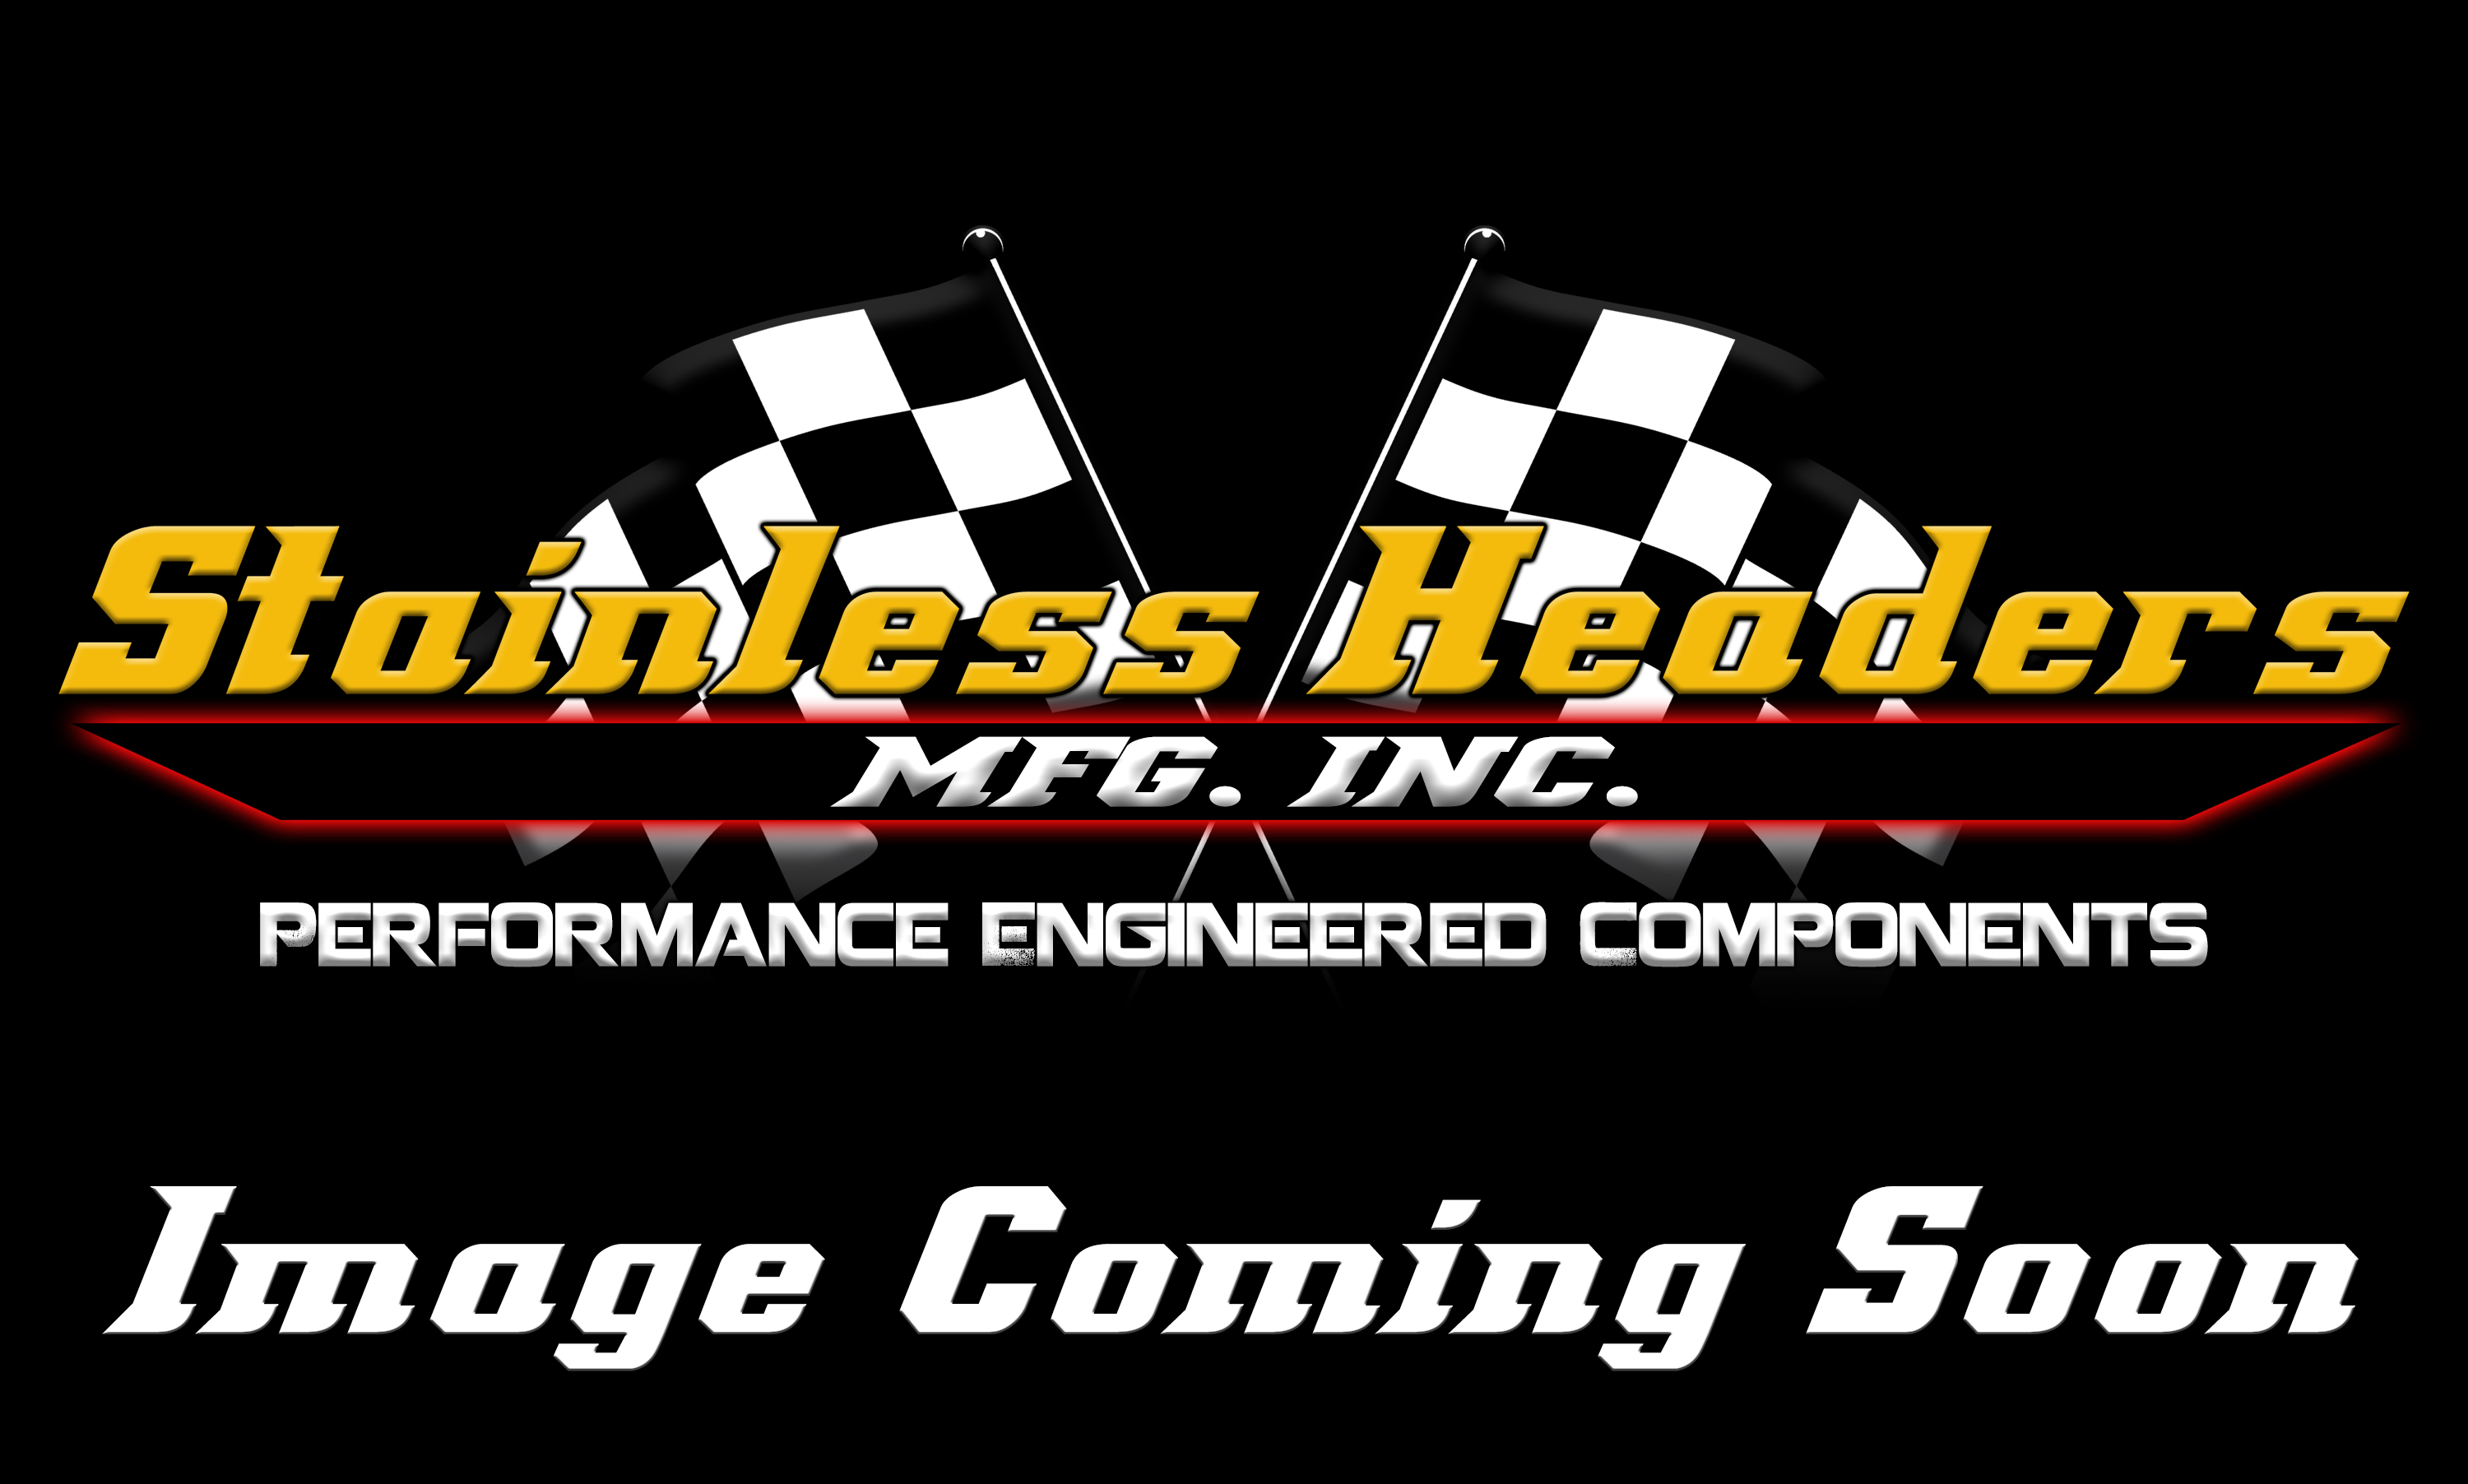 Stainless Headers - Small Block Ford-W Dart Pro1 225 cc Custom Turbo Header Build Kit - Image 4